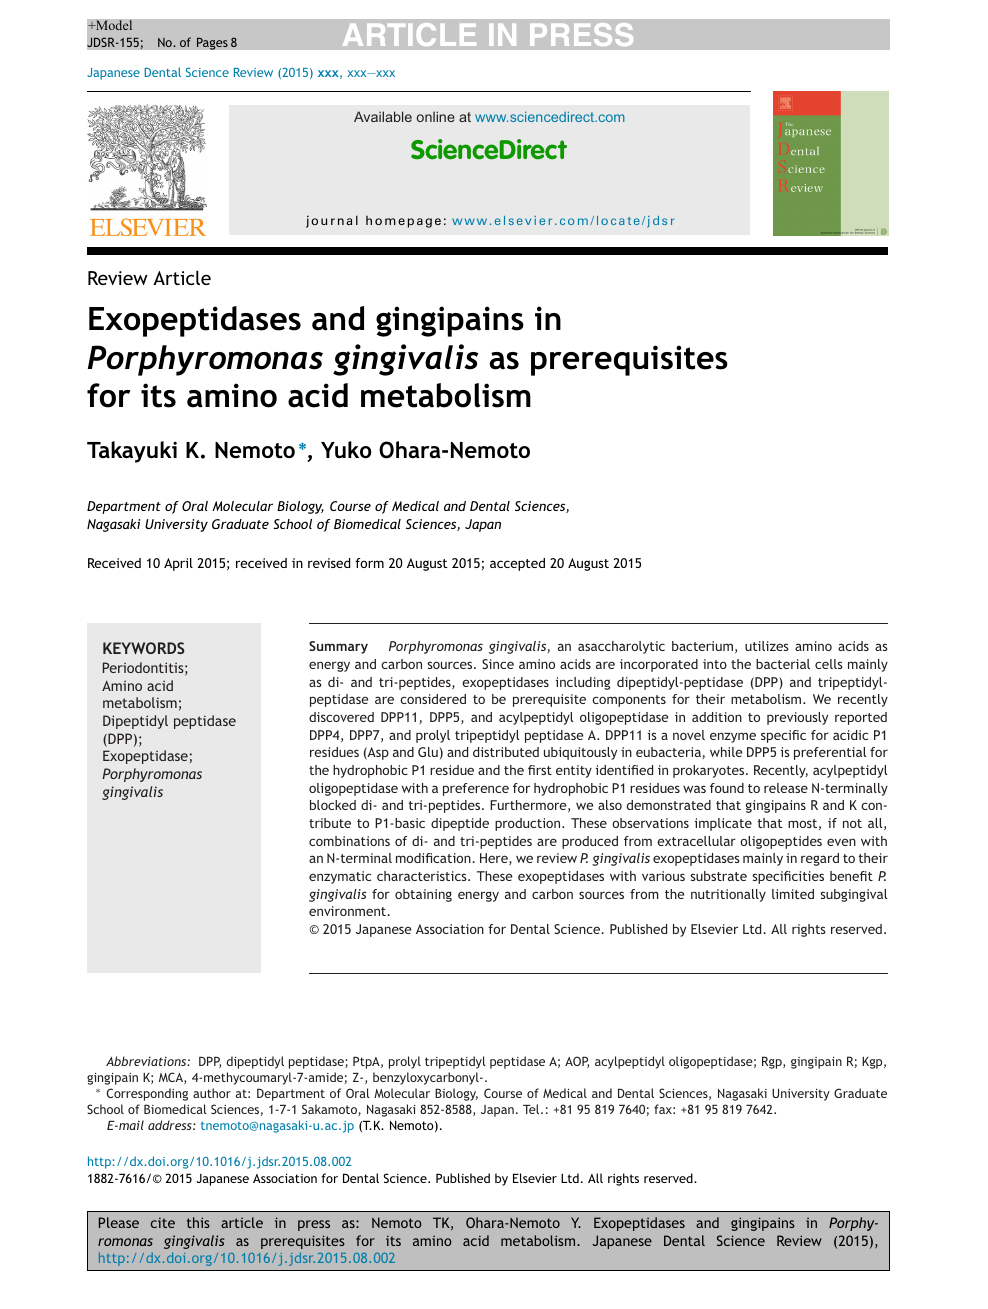 Exopeptidases And Gingipains In Porphyromonas Gingivalis As